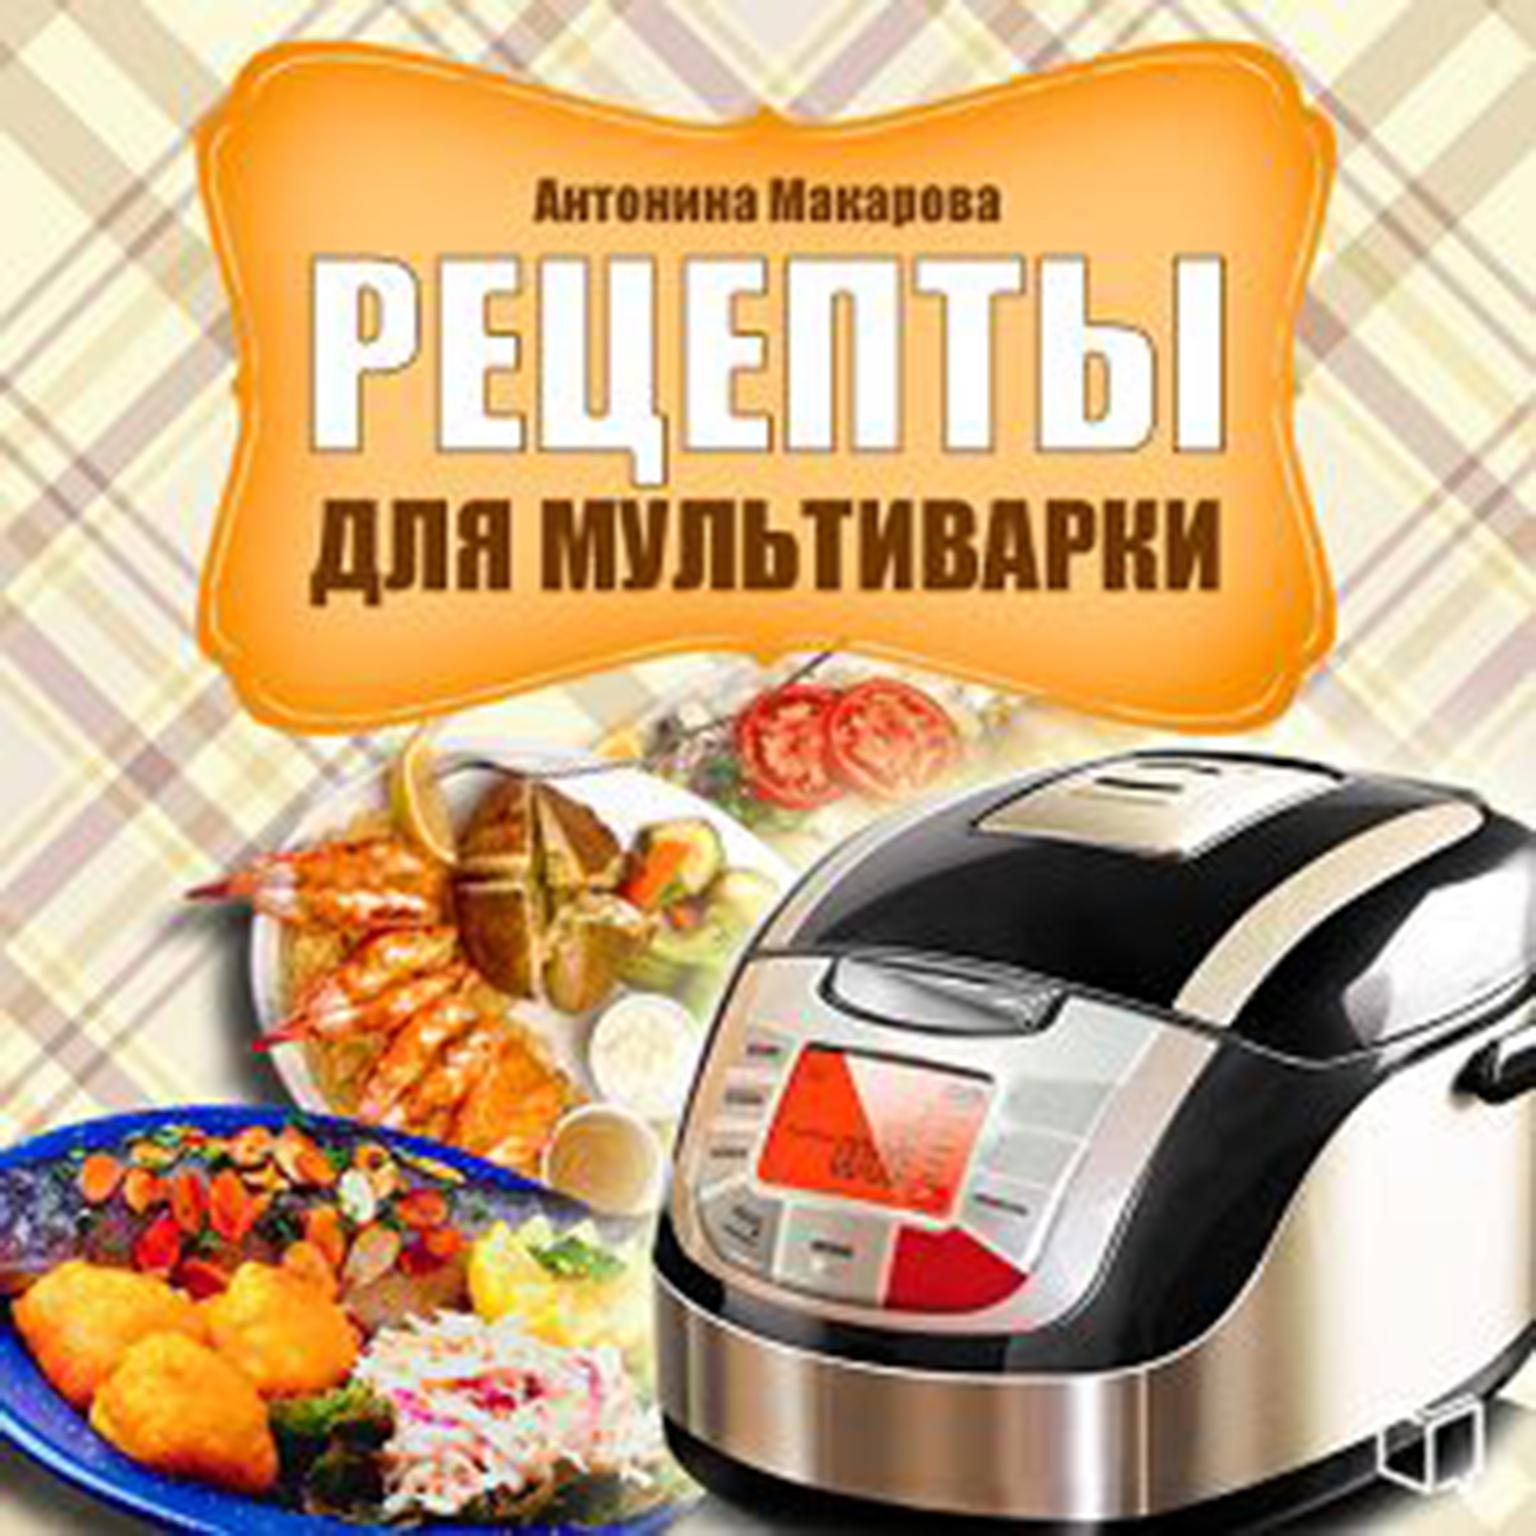 Recipes for Multicooker [Russian Edition] Audiobook, by Antonina Makarova